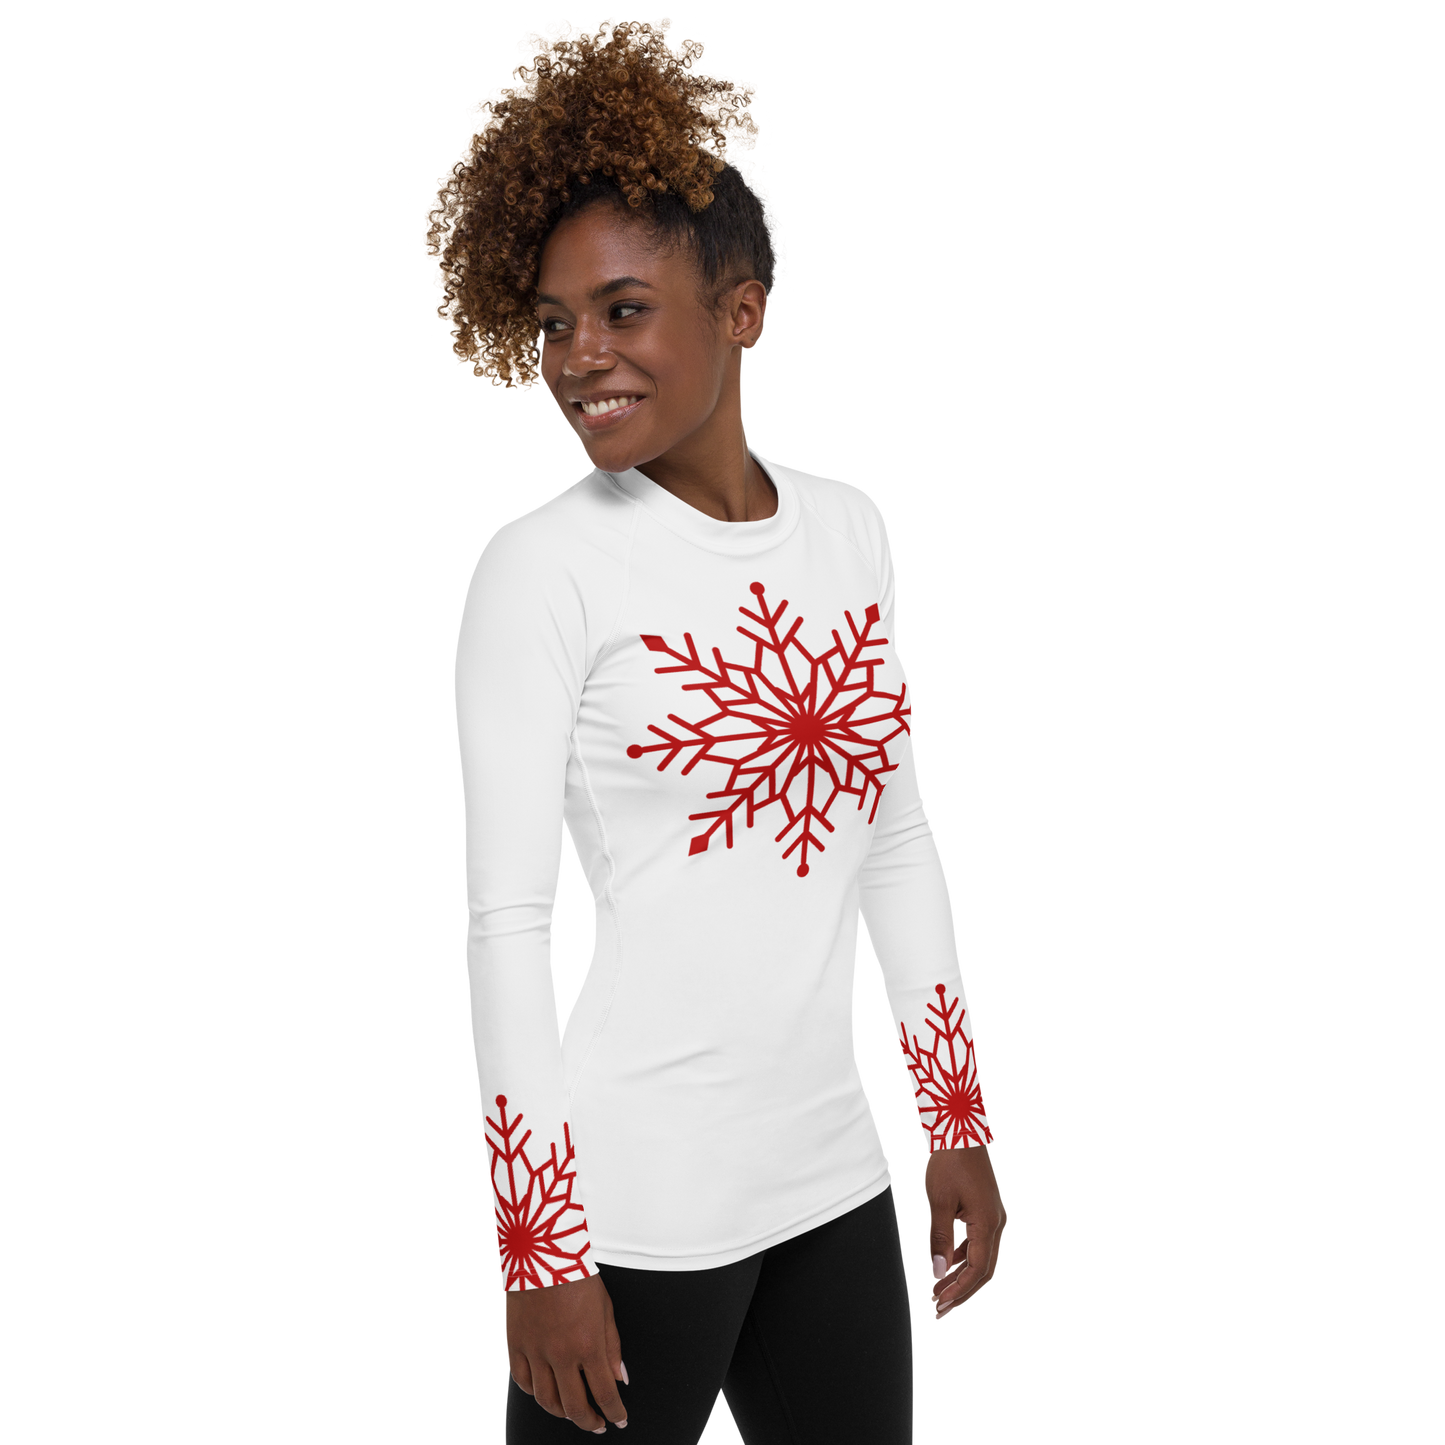 Winter Snowflake Top, Dark Red Snowflake on White Women's Rash Guard, Holiday Top